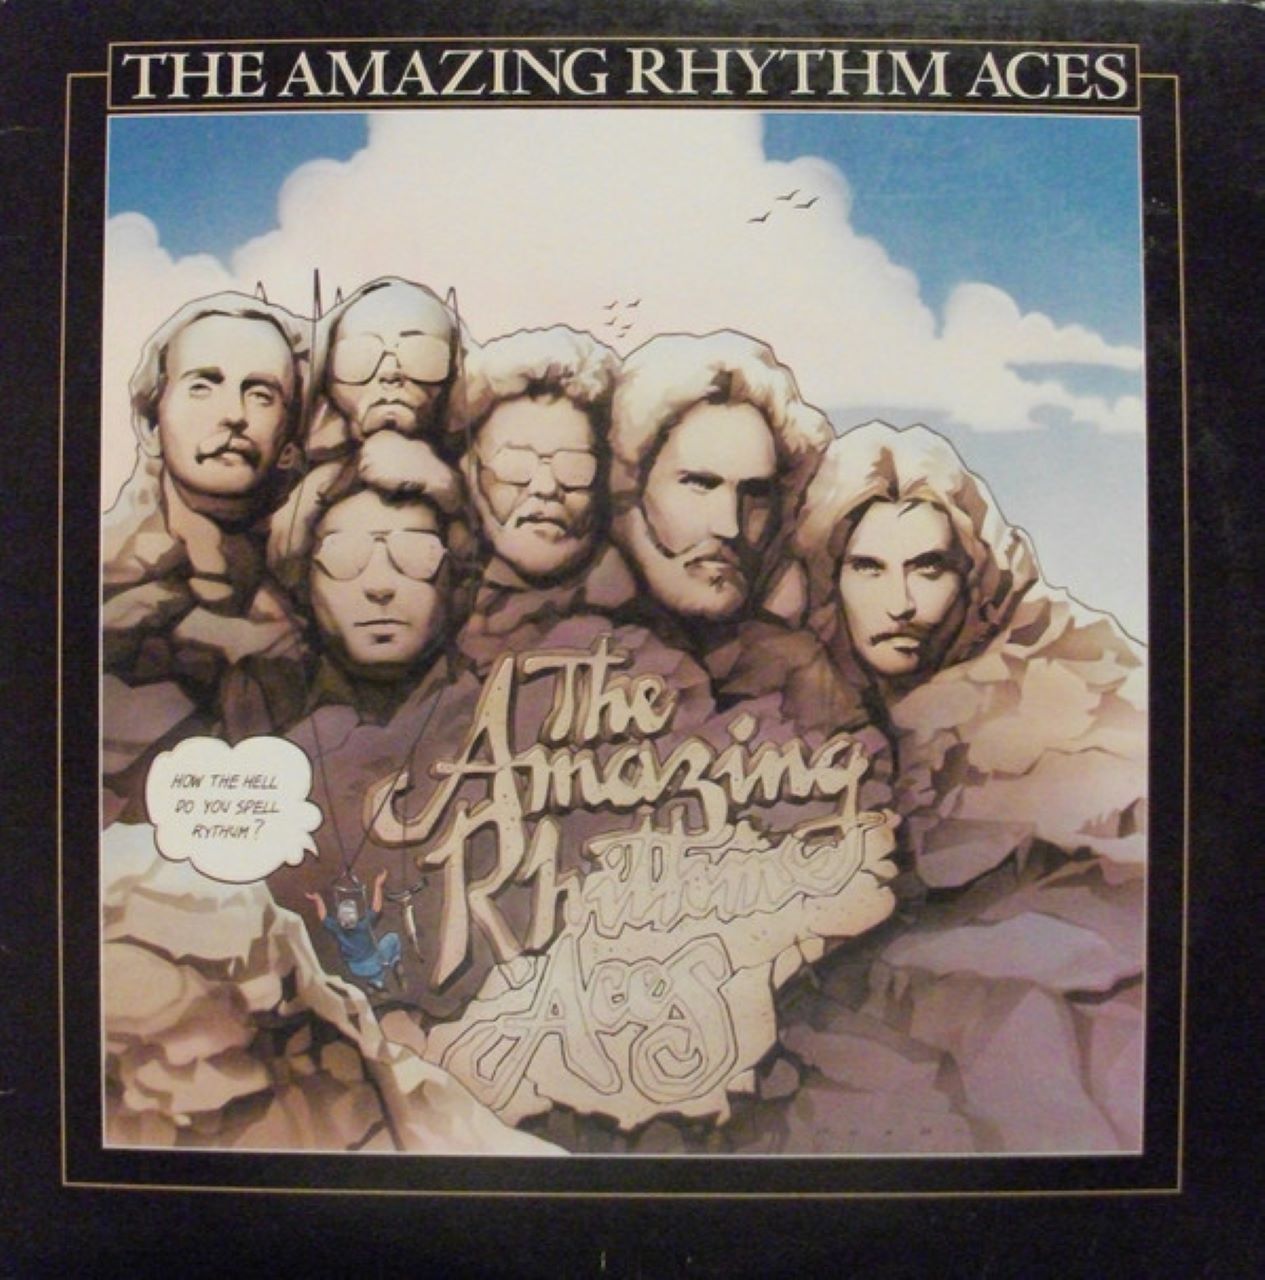 Amazing Rhythm Aces - How The Hell Do You Spell Rhythm cover album